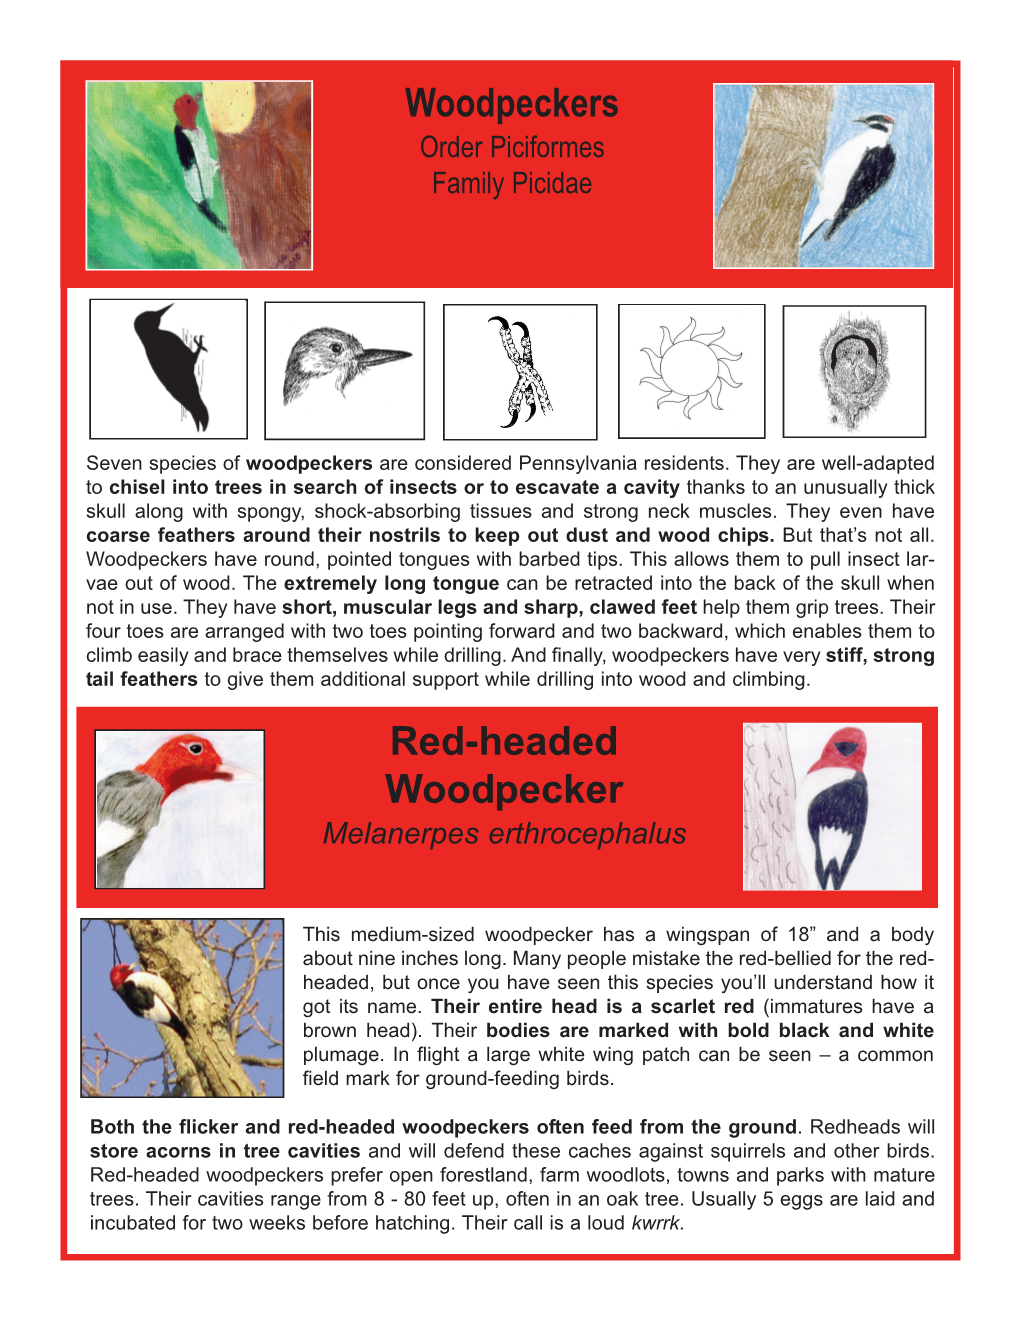 Pileated Woddpecker, Northern Flicker, Downy Woodpecker